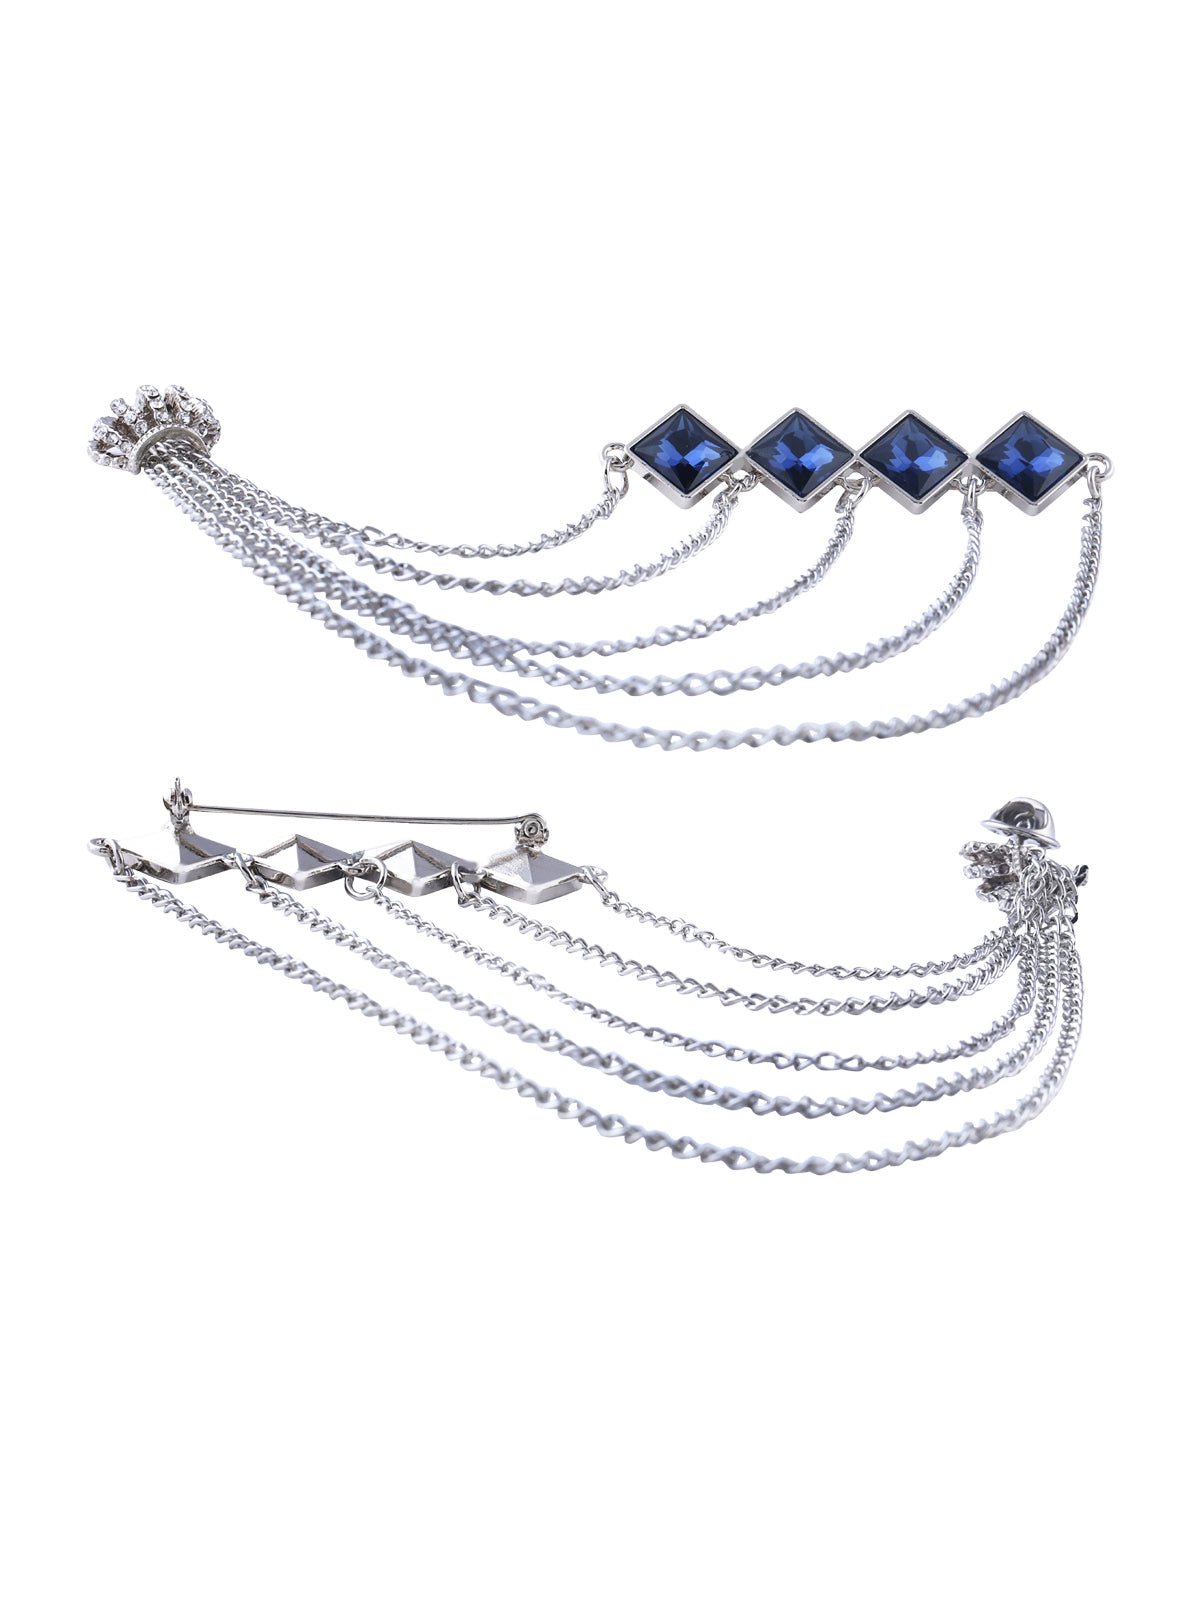 Diamond Crown & Chain Attractive Brooch Pin